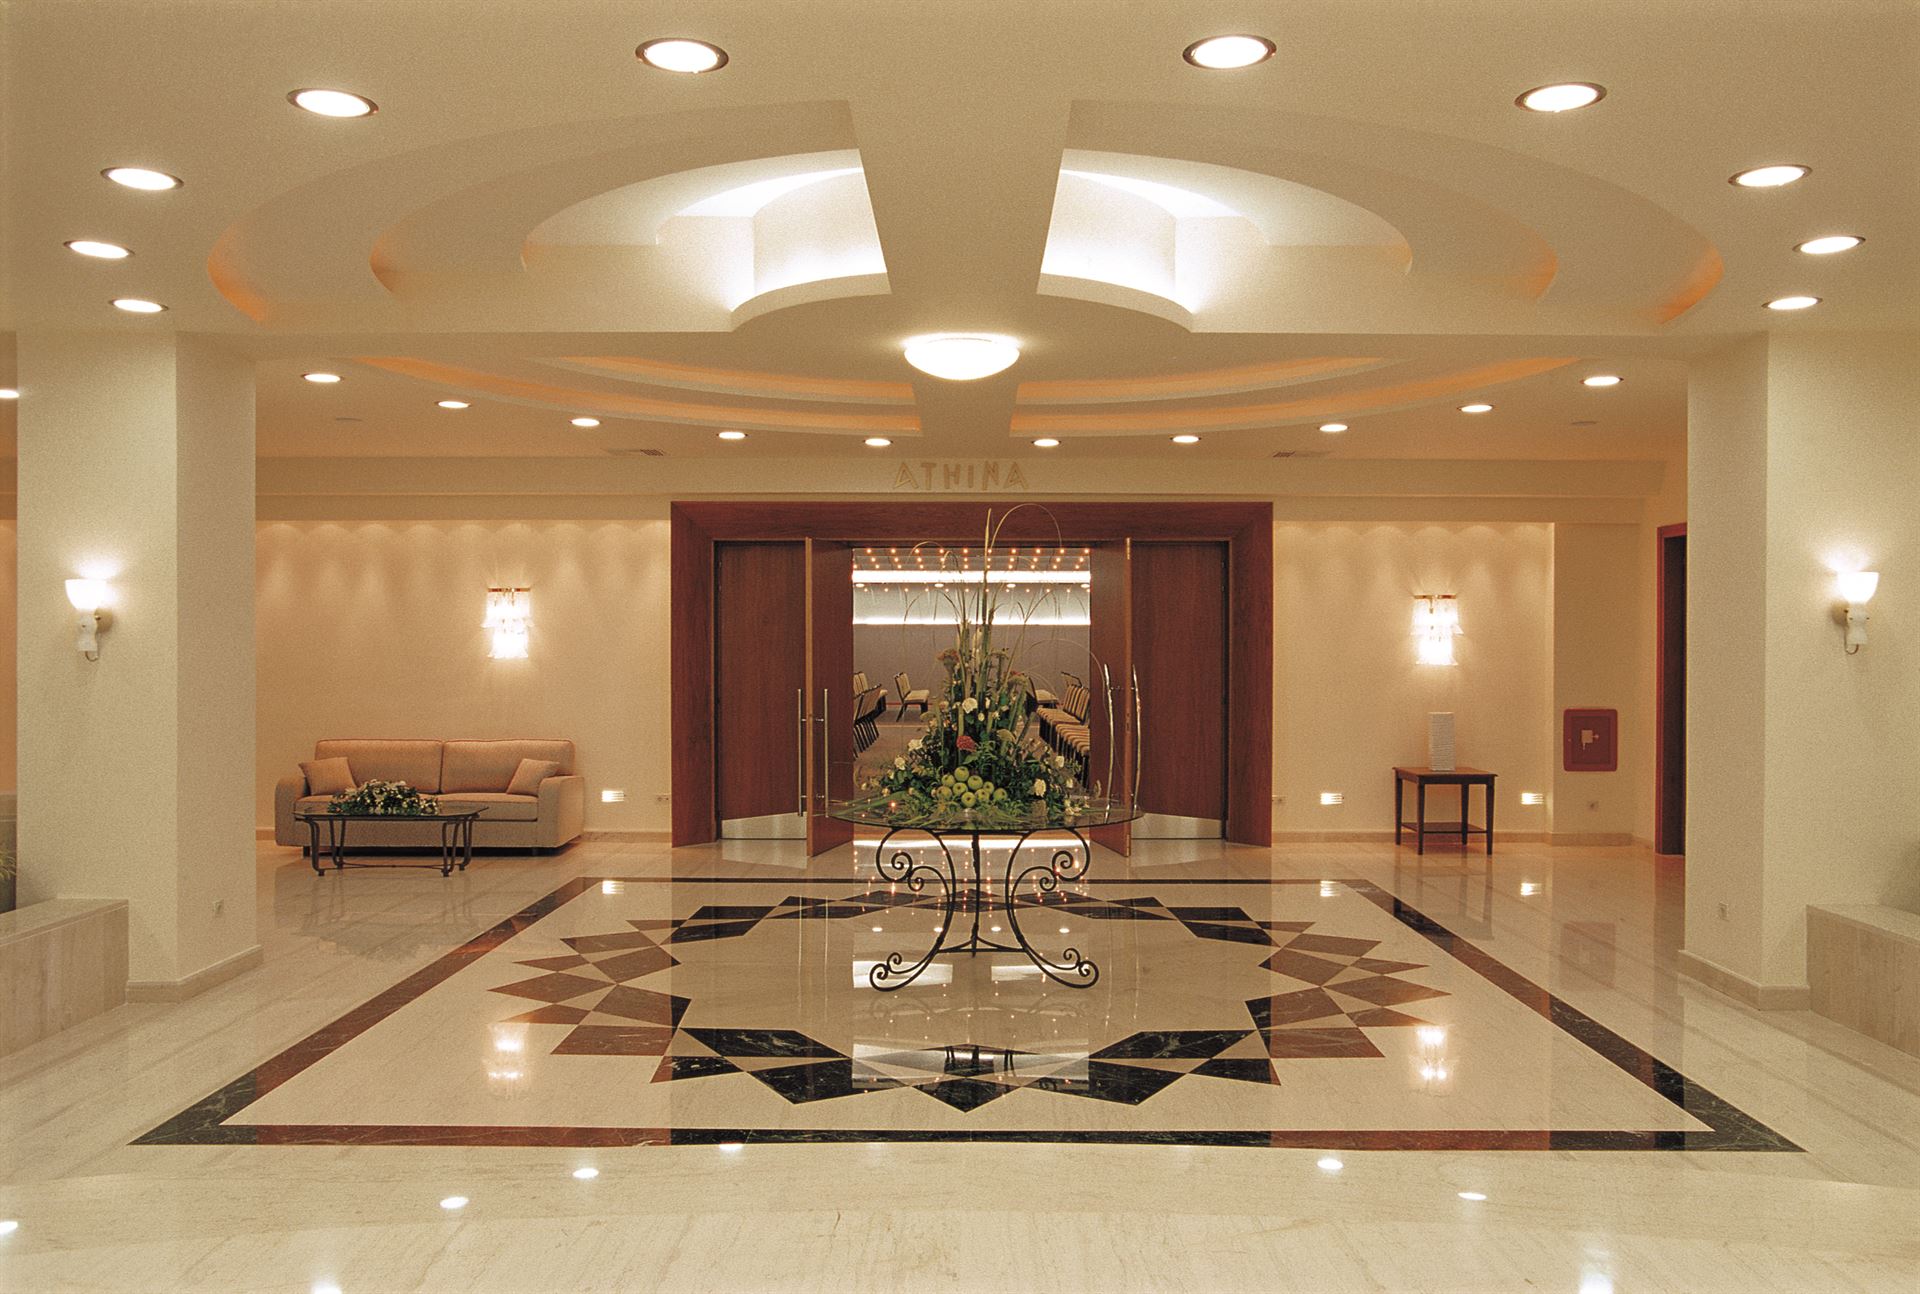 Minoa Palace Resort Hotel